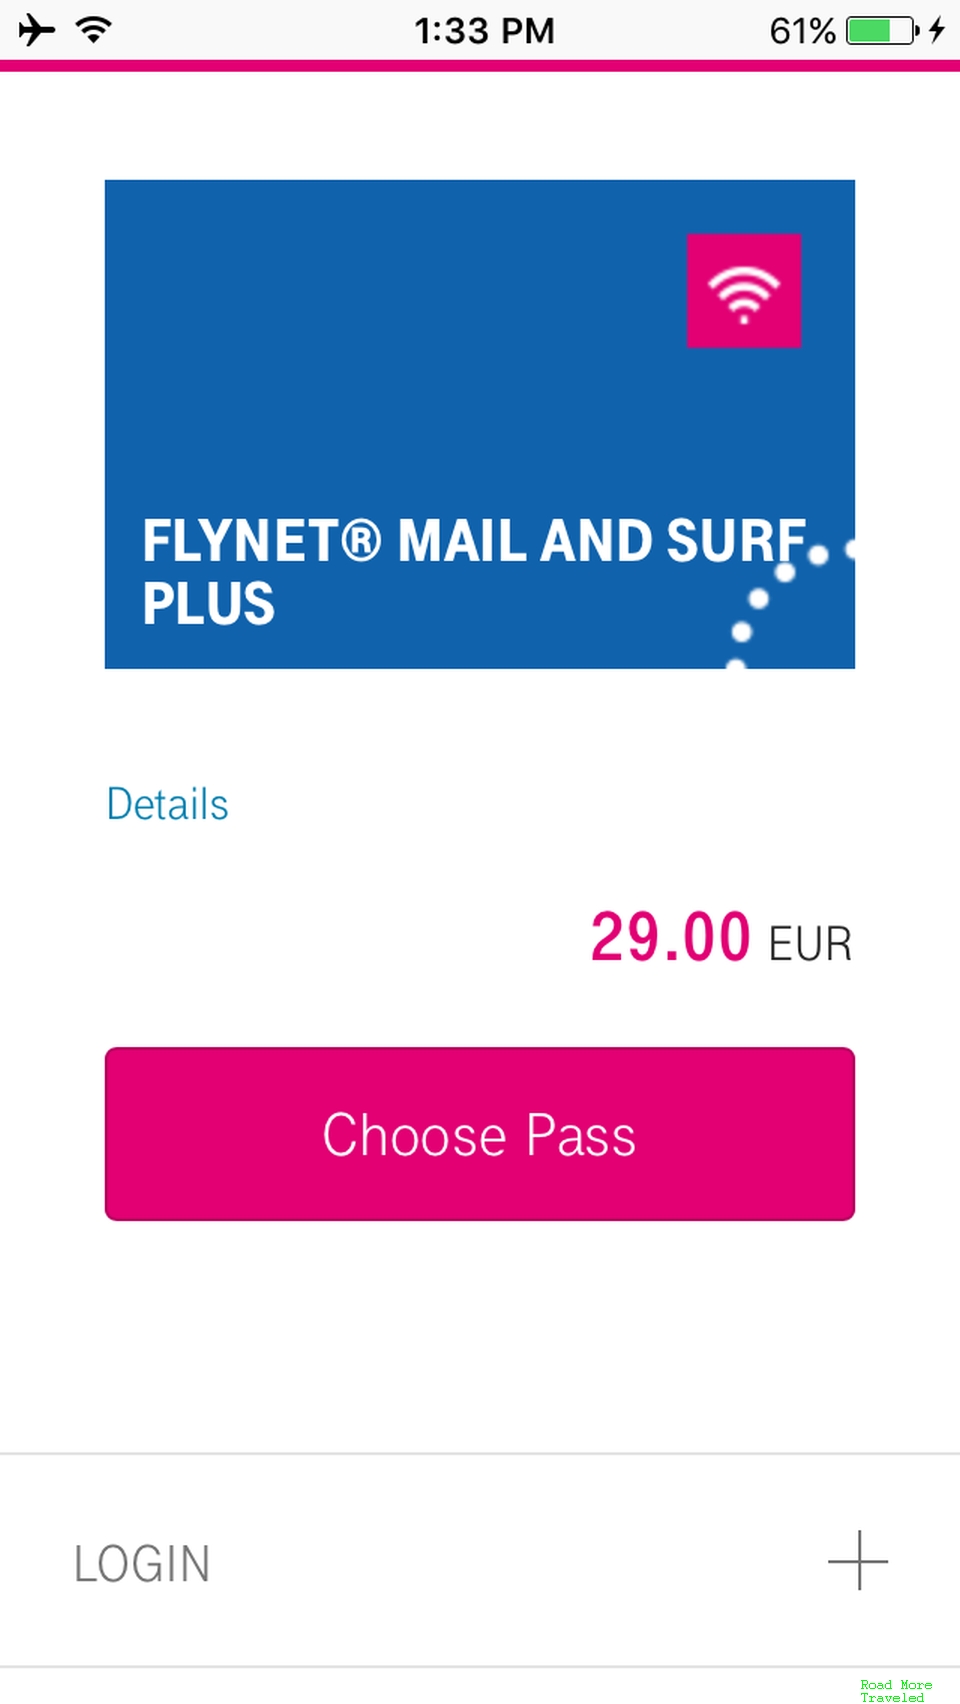 Lufthansa FlyNet pricing - 2